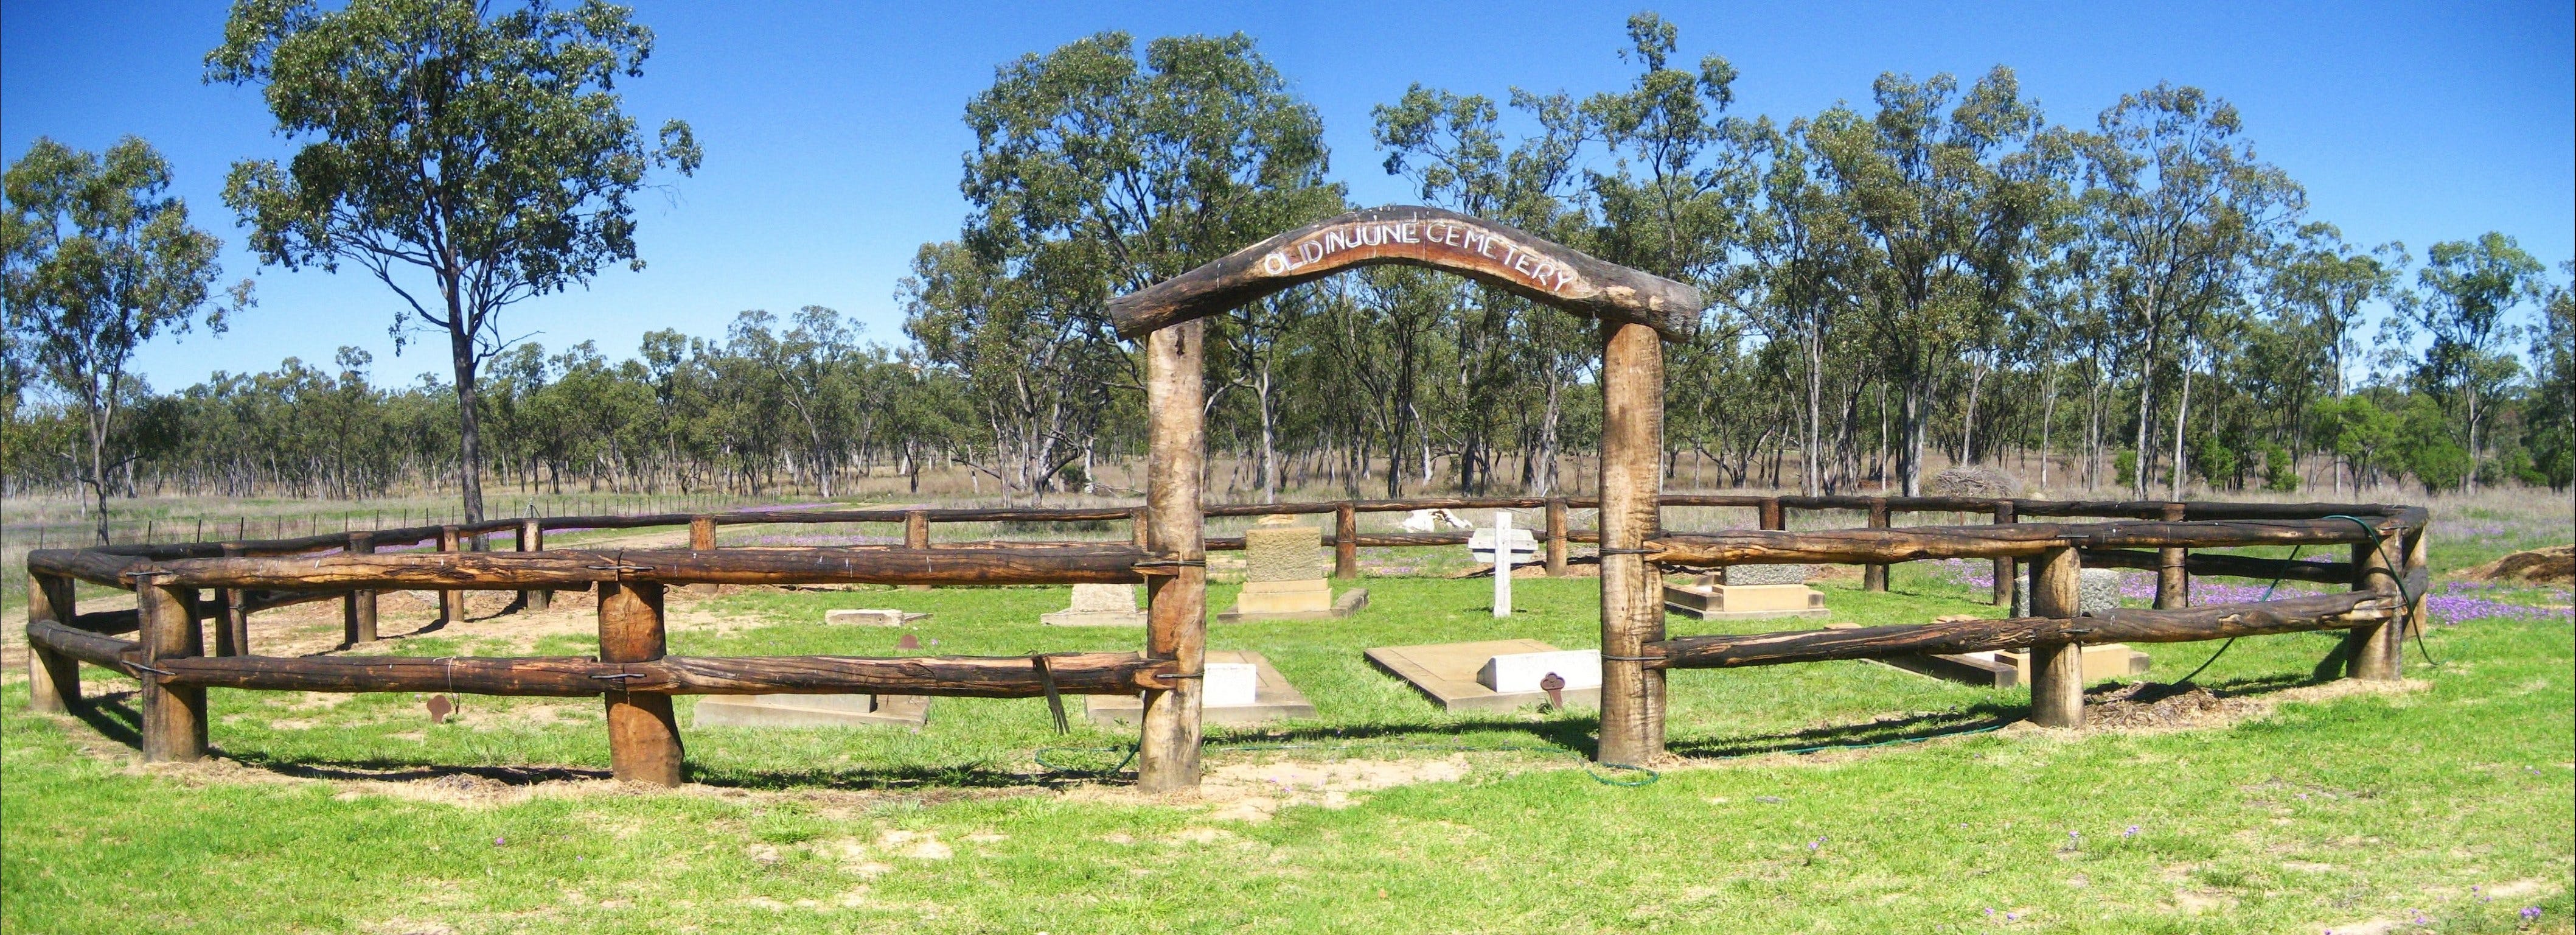 Old Injune Cemetery - Wagga Wagga Accommodation